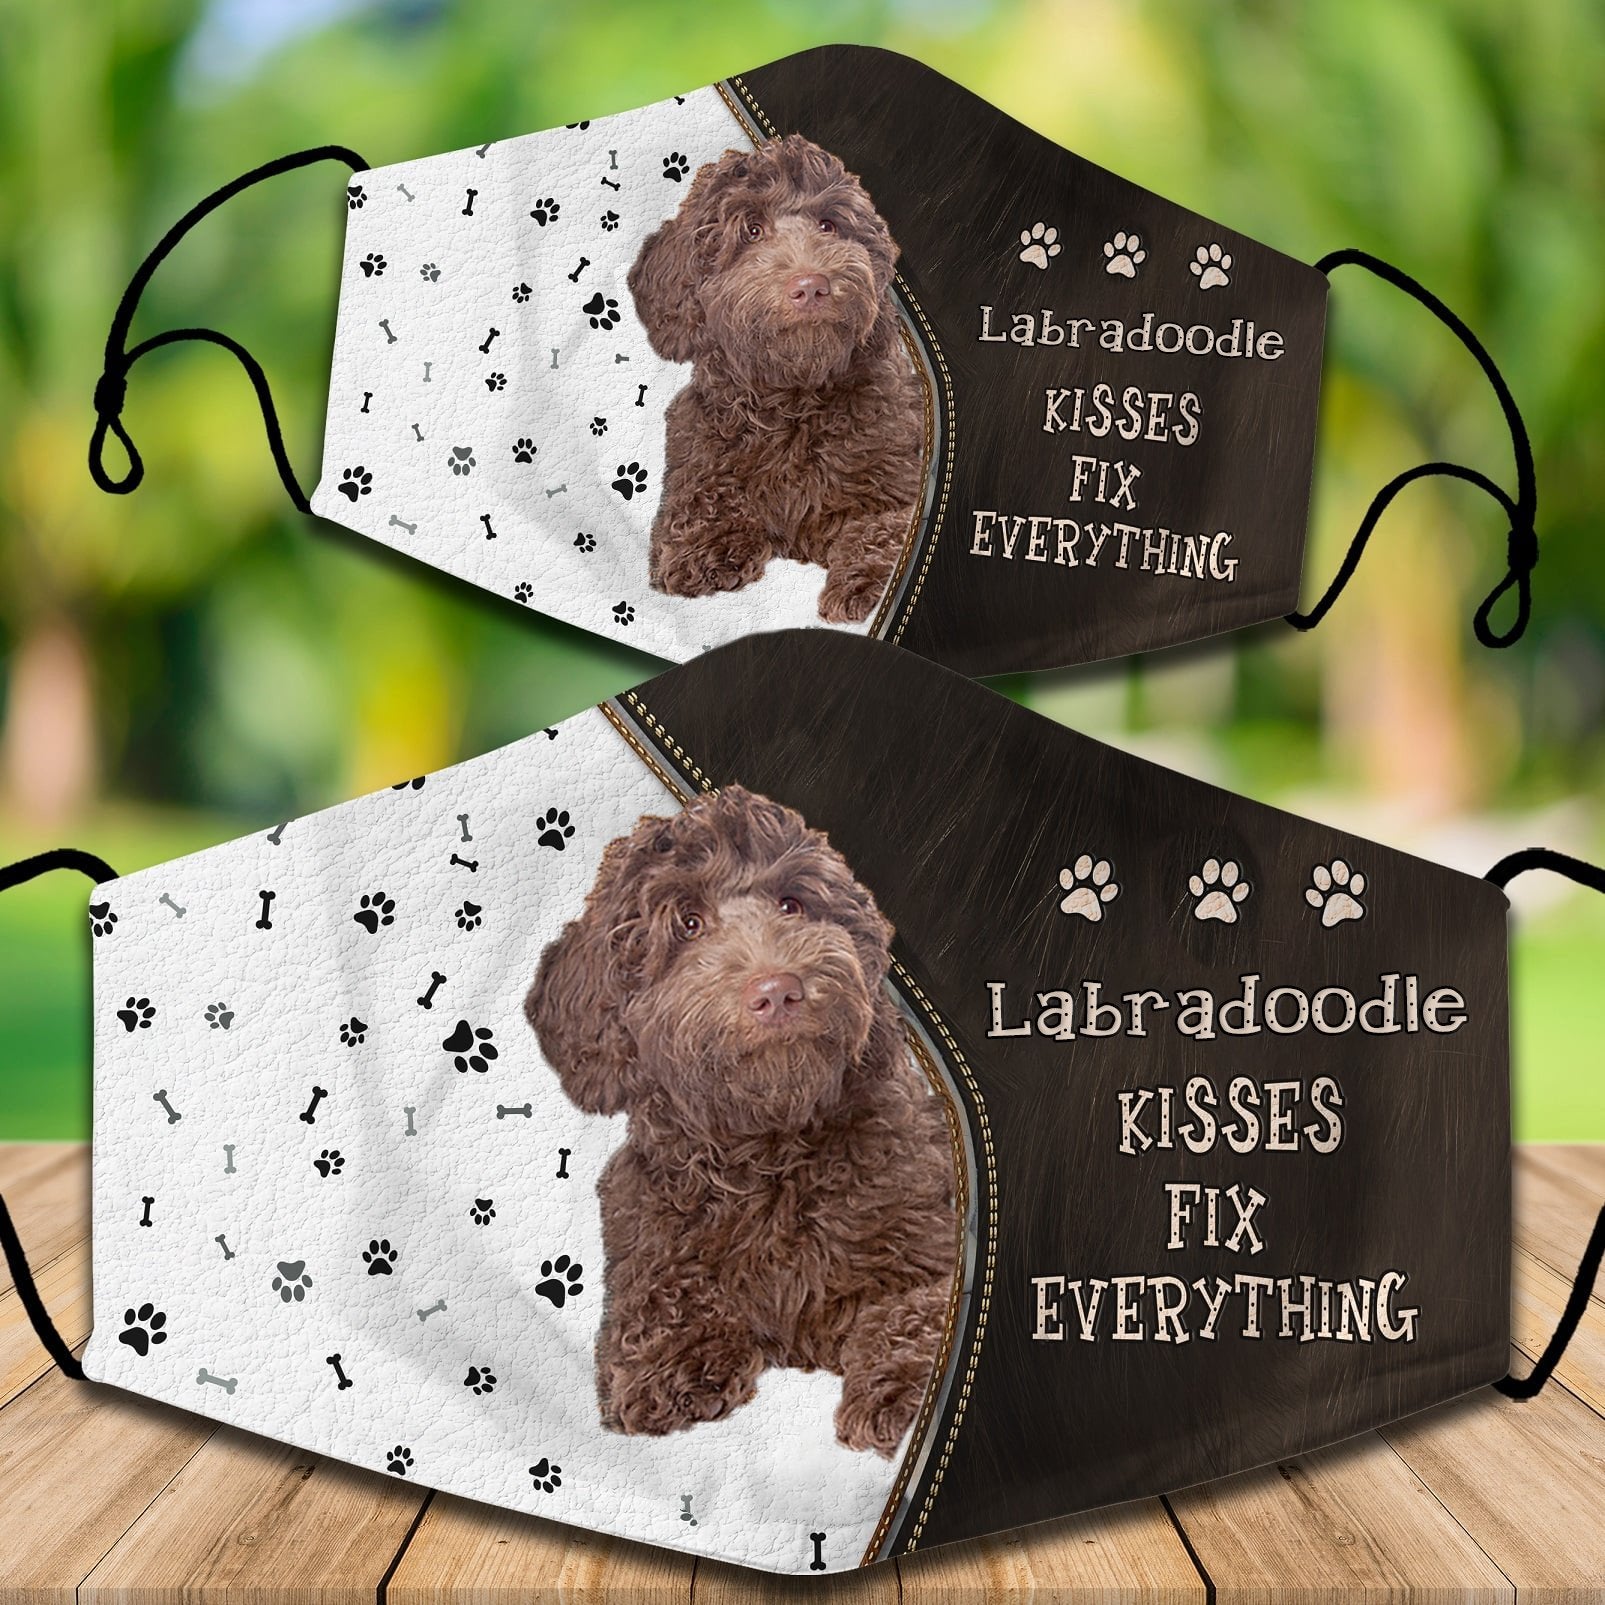 Labradoodle-02 Kisses Fix Everything Veil